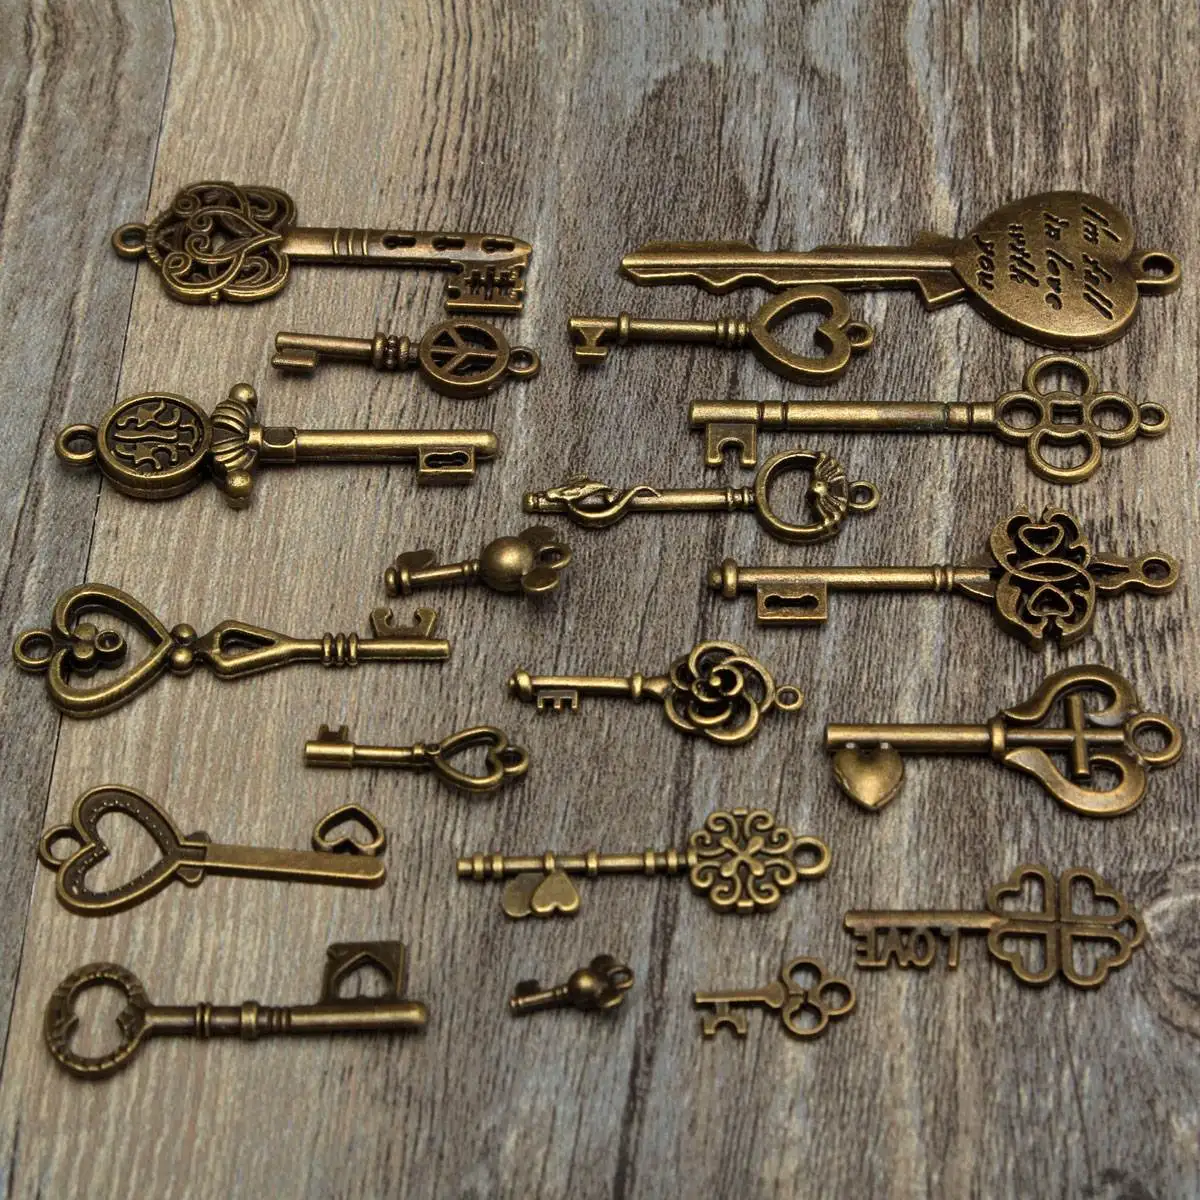 Welliestr Vintage Skeleton Keys Charm Set Royal Key in Antique Bronze Pack of 12